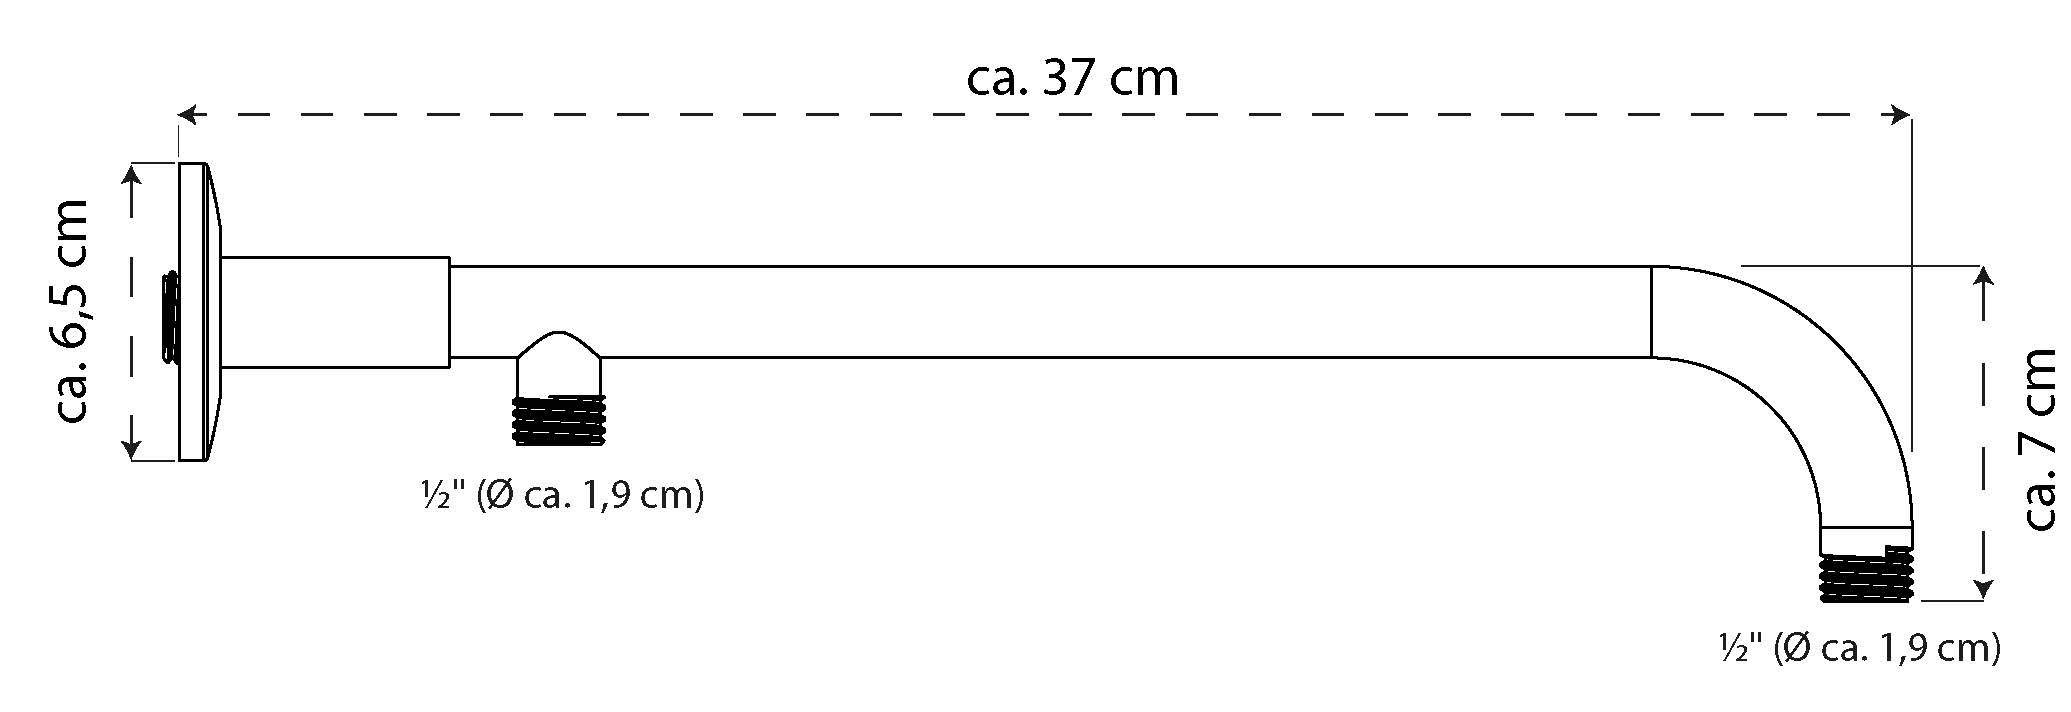 Schütte Wandanschlussbogen, Unterputz 37cm, Chrom °, Anschlussbogen 90 LYON, Duschbrause für